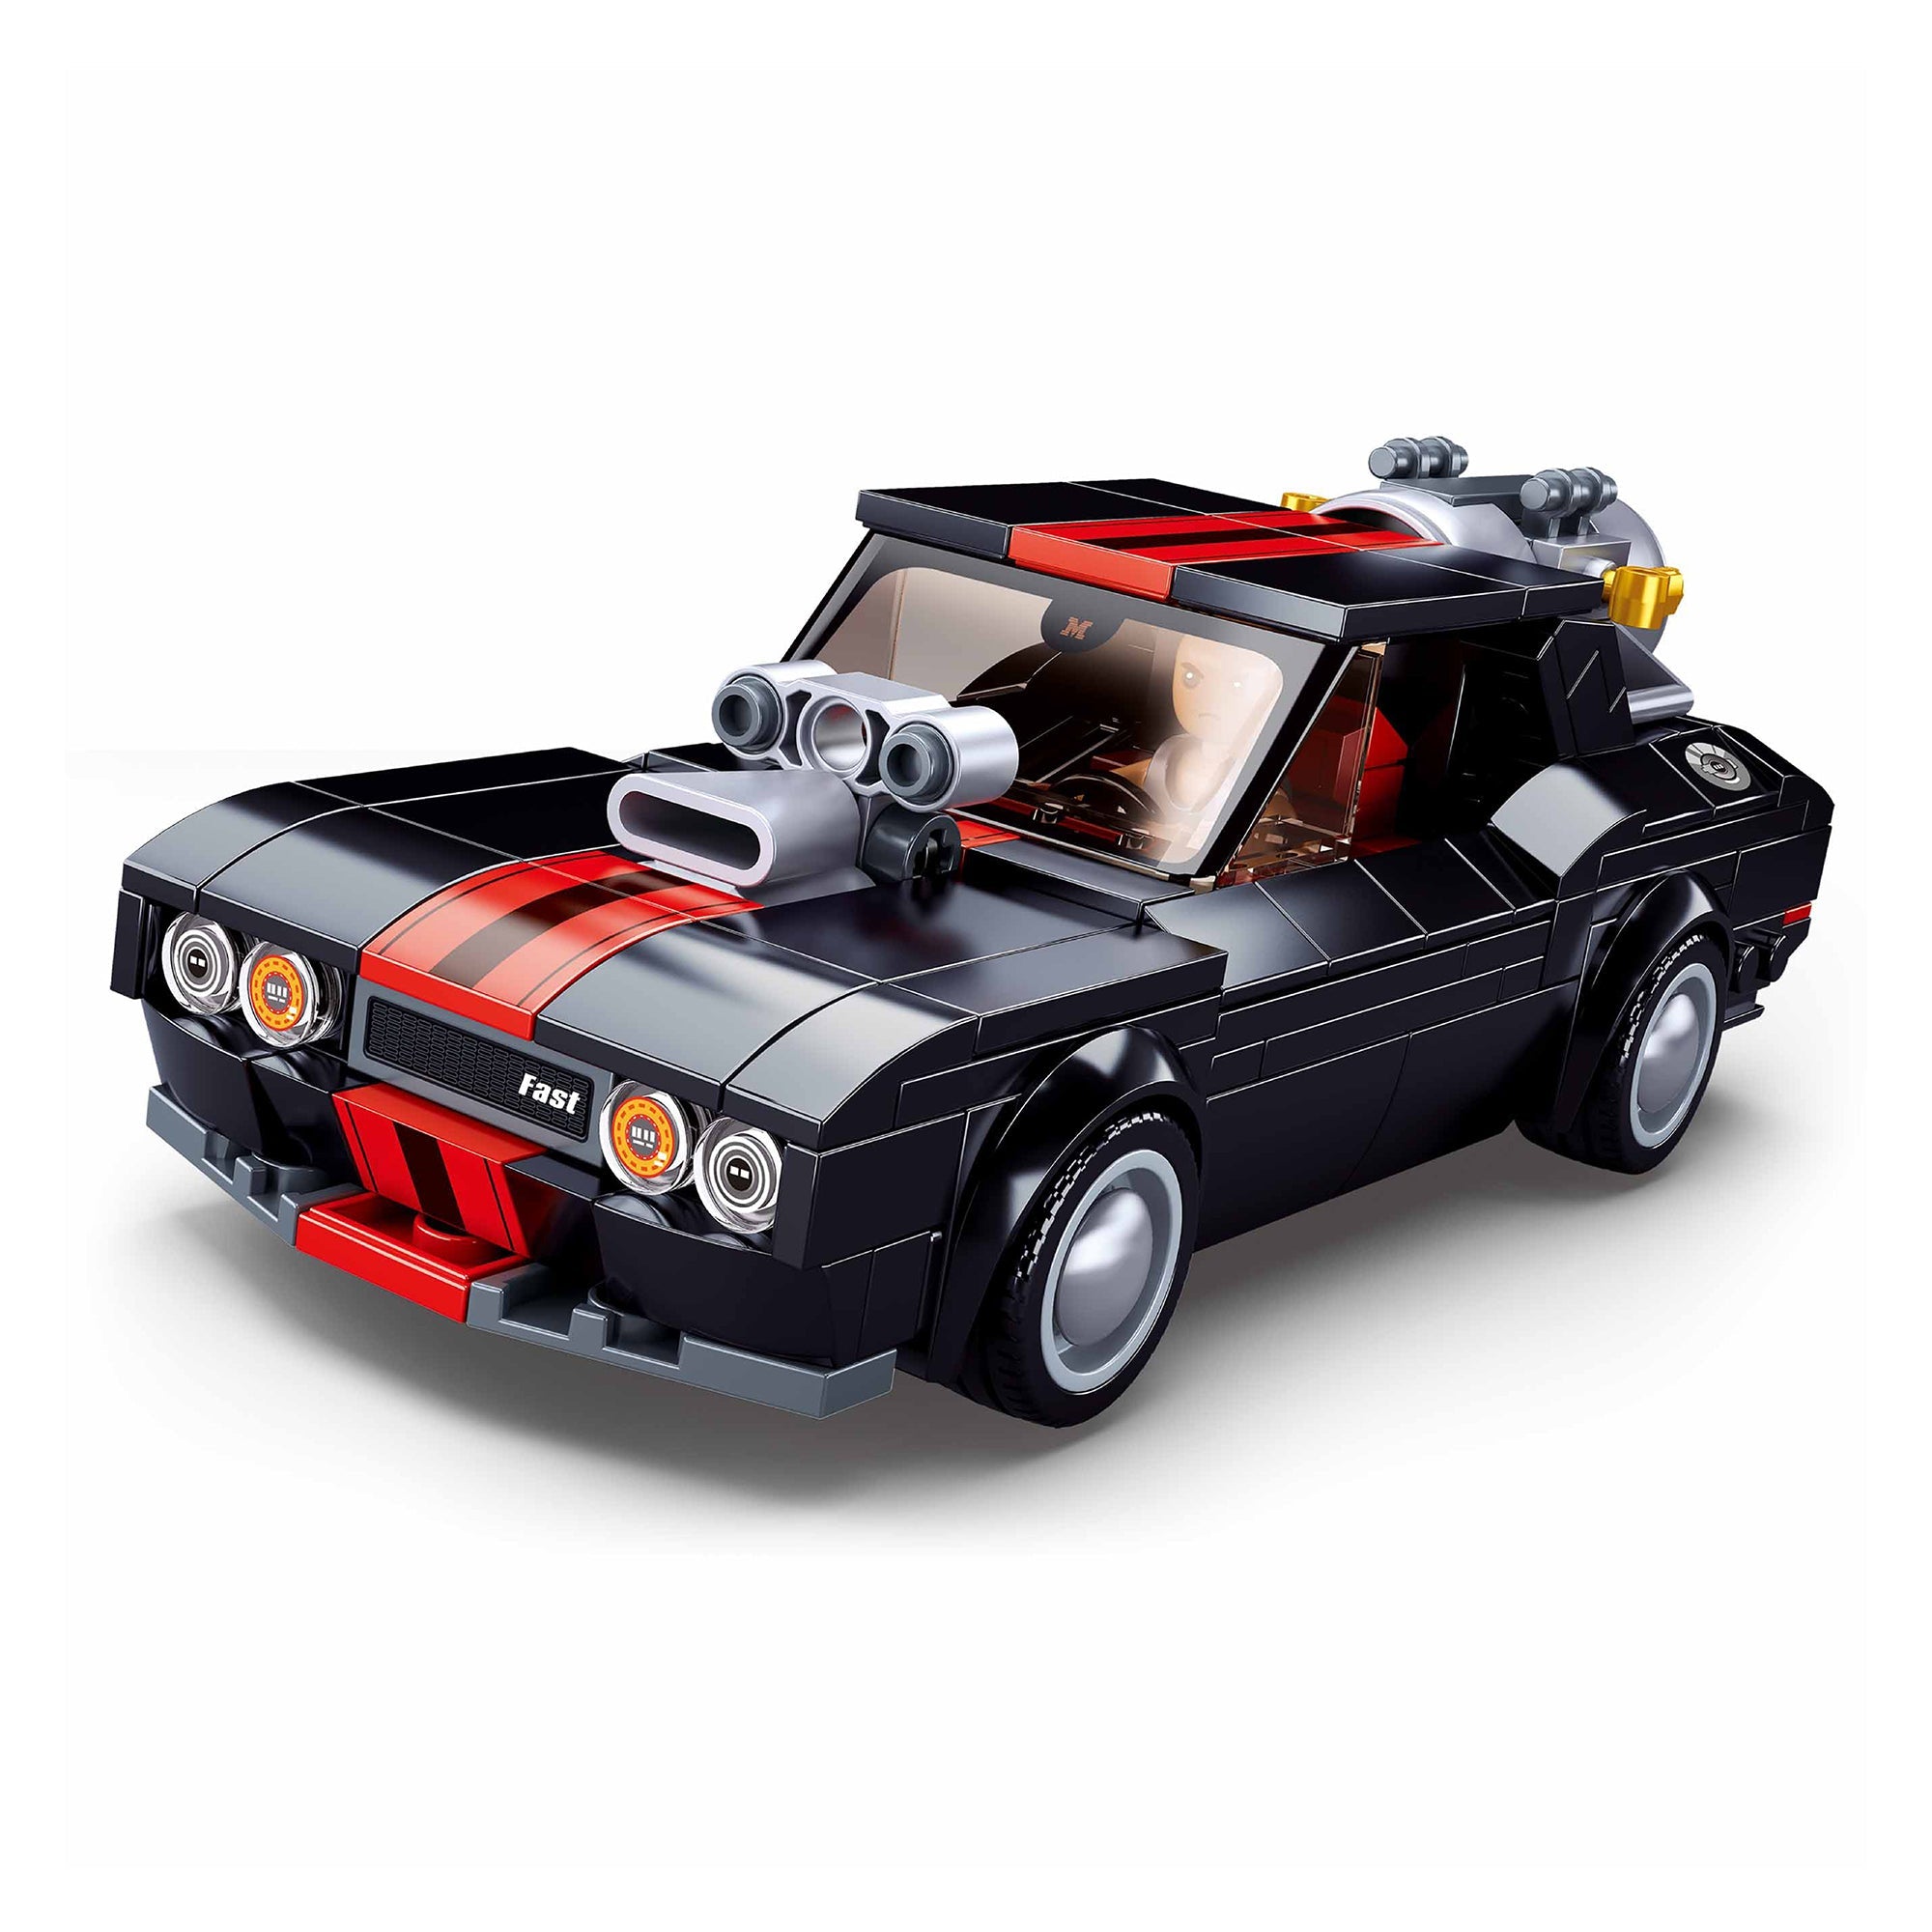 Playzu By Sluban Modified Car 2IN1 || 8years++ - Toys4All.in